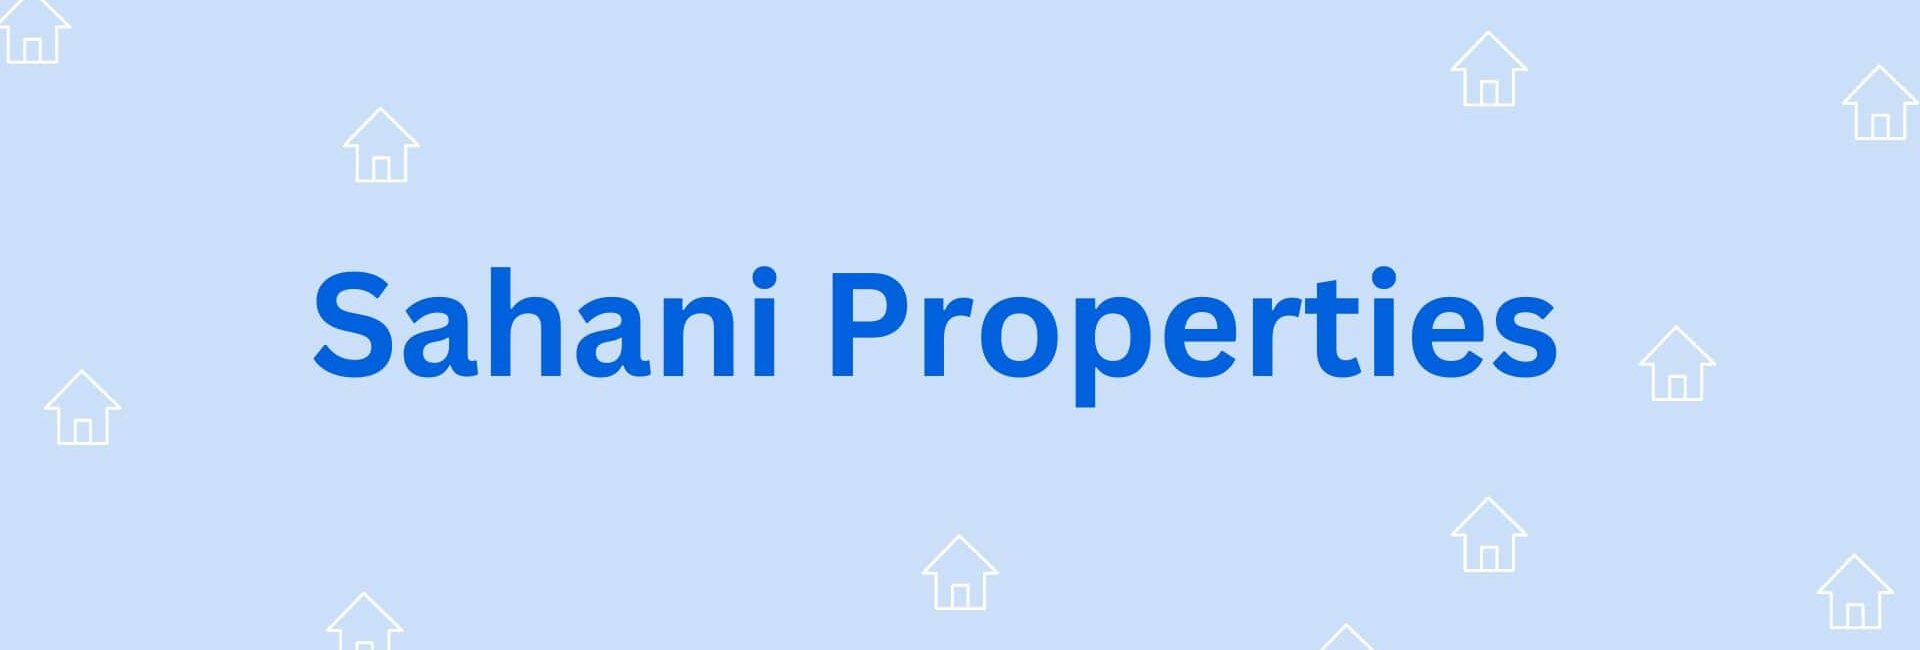 Sahani Properties - Property Dealer in Hisar